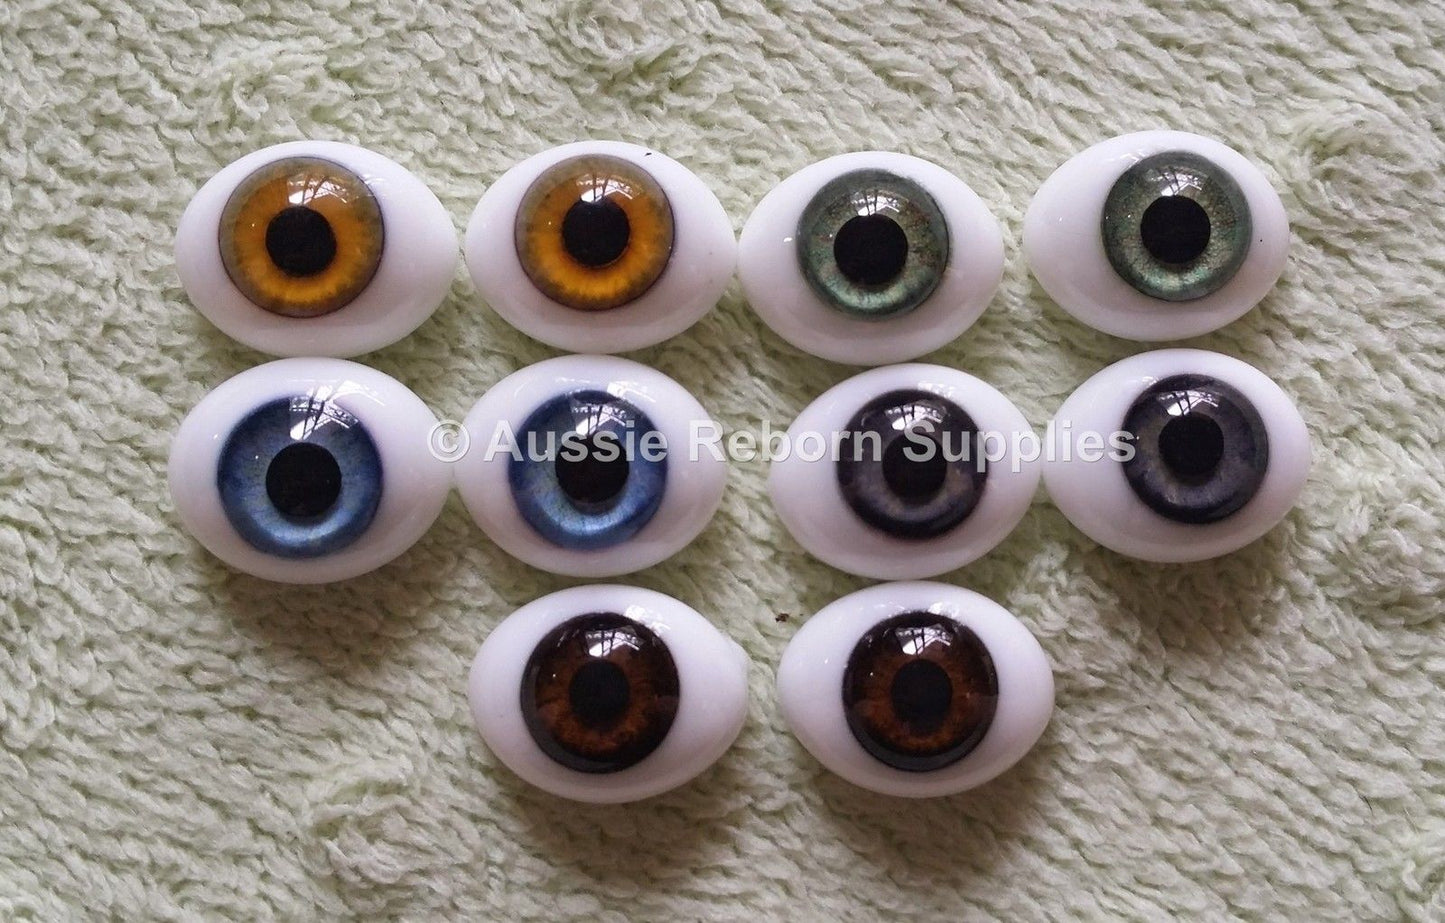 14mm Hazel Oval Glass Eyes Reborn Baby Doll Making Supplies